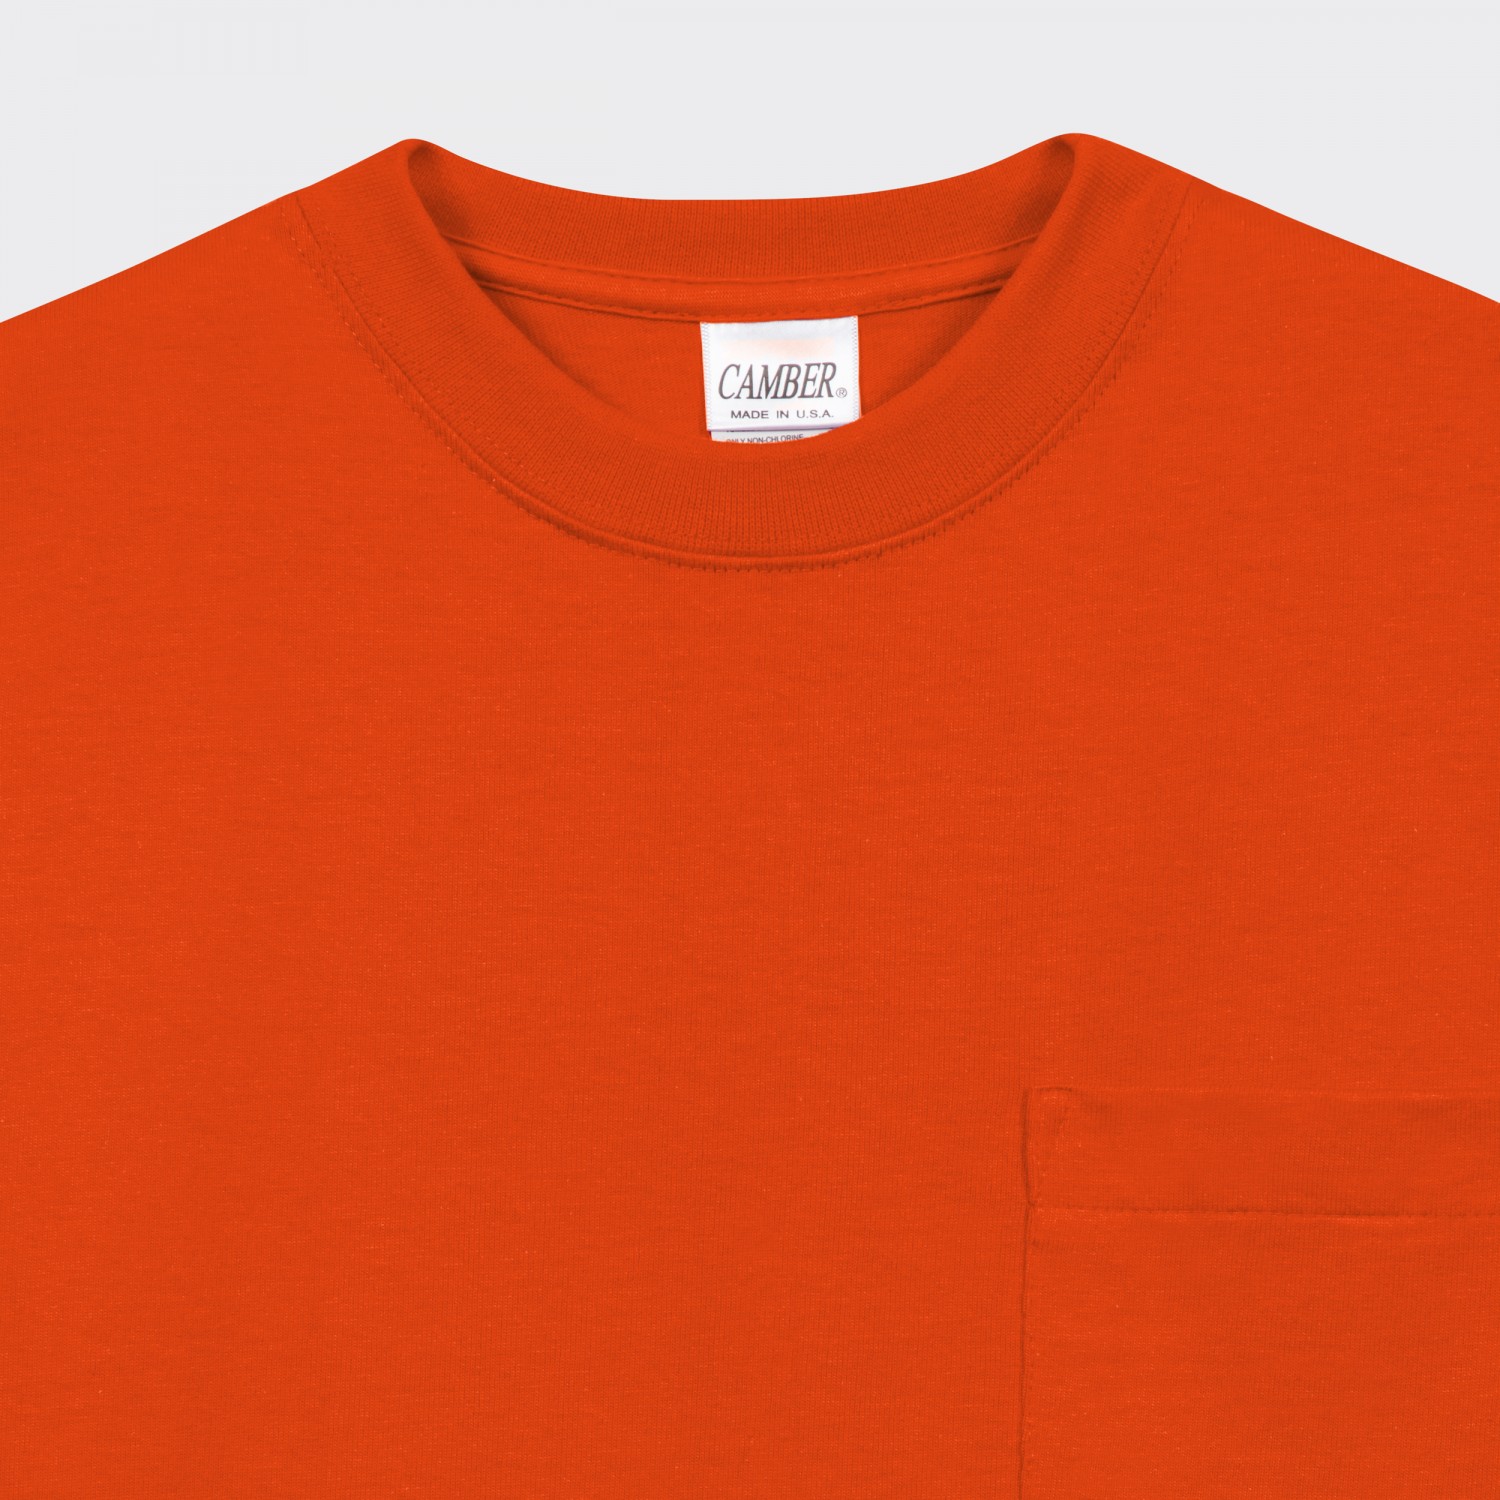 Pocket : Camber USA T-shirt : Orange